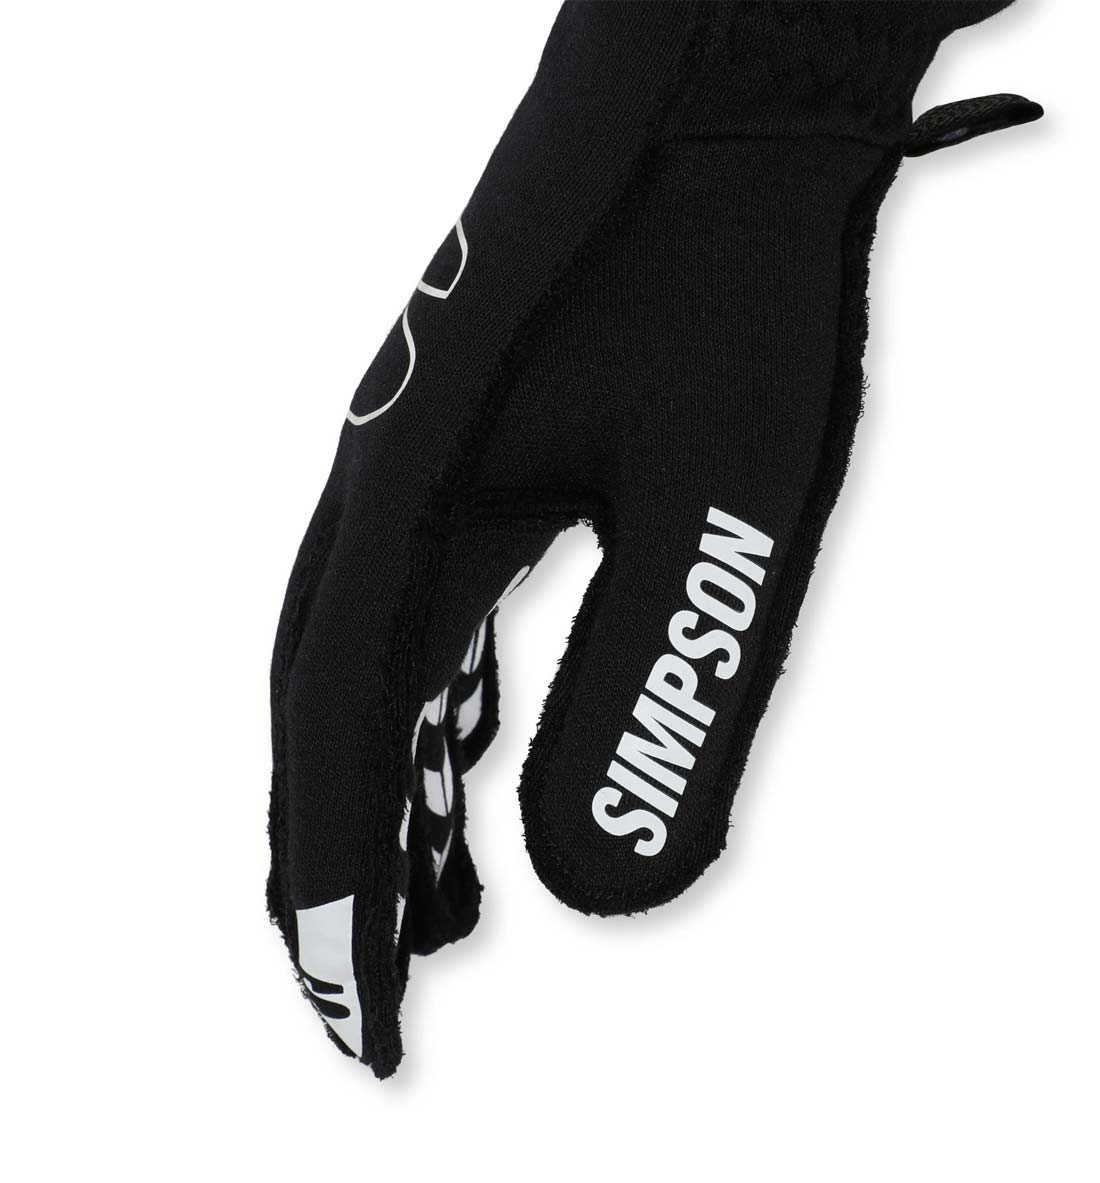 Simpson Endurance Race Gloves - Black